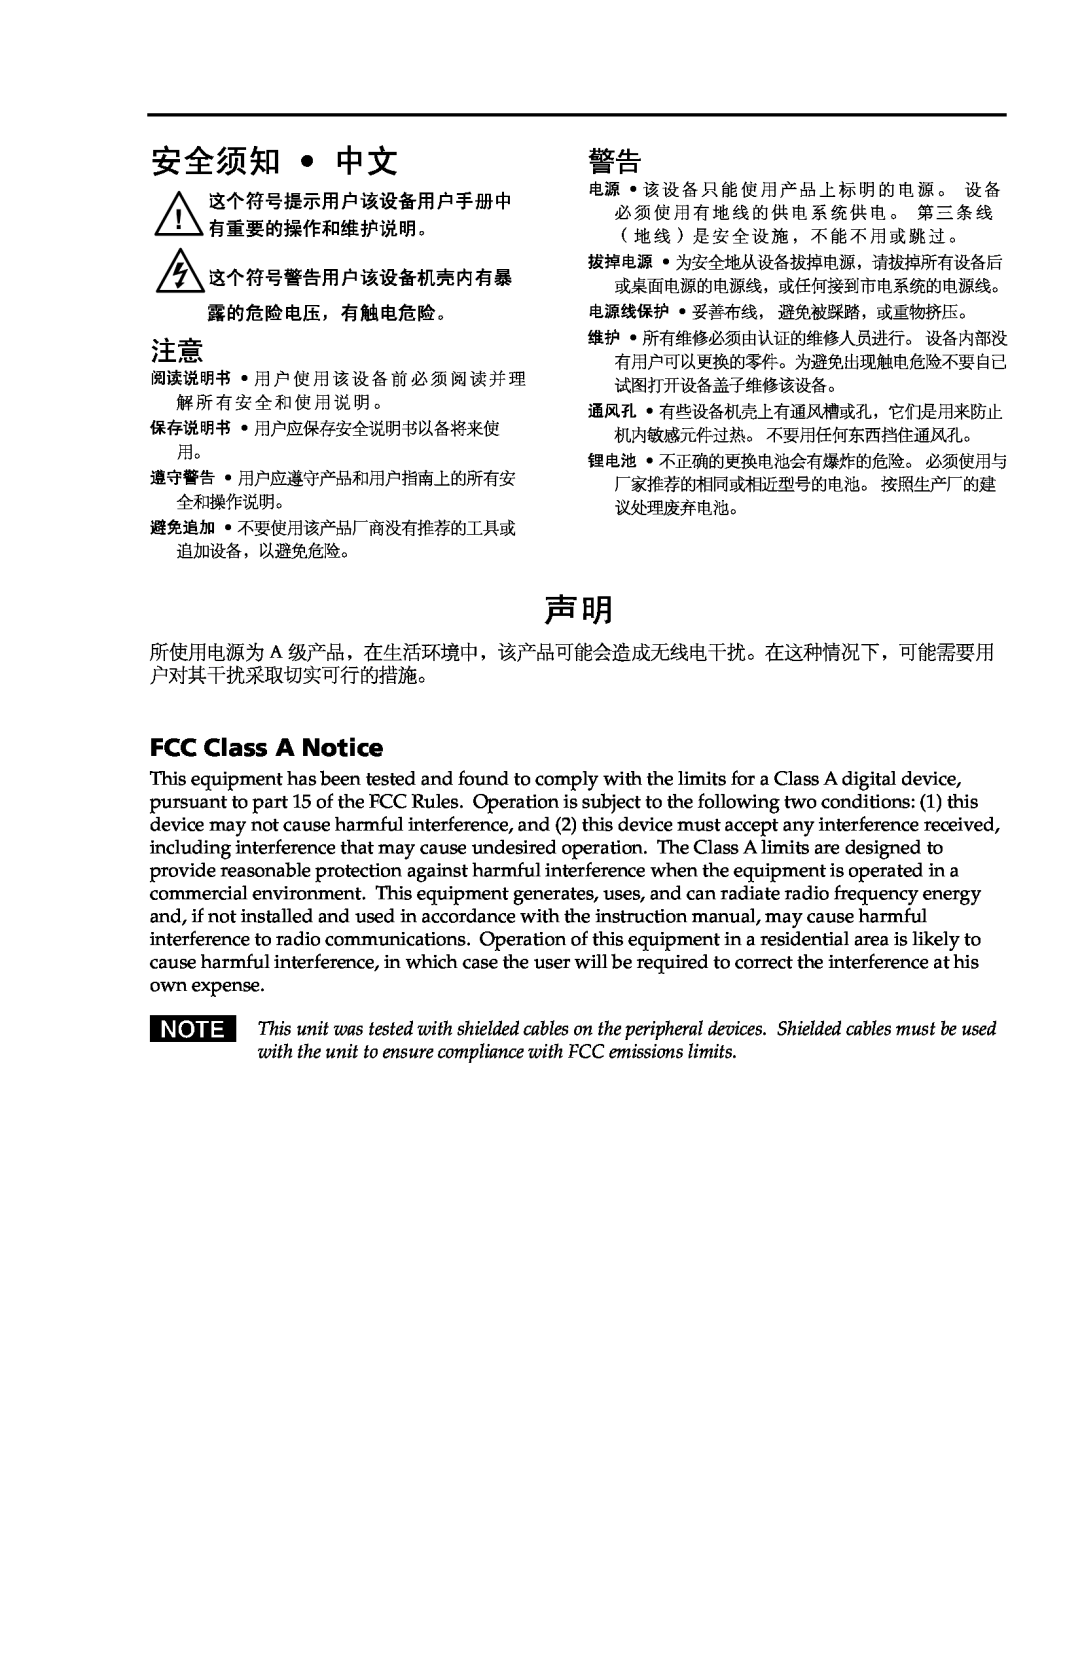 Extron electronic MTP R 15HD RSA D user manual 安全须知 中文, FCC Class A Notice 